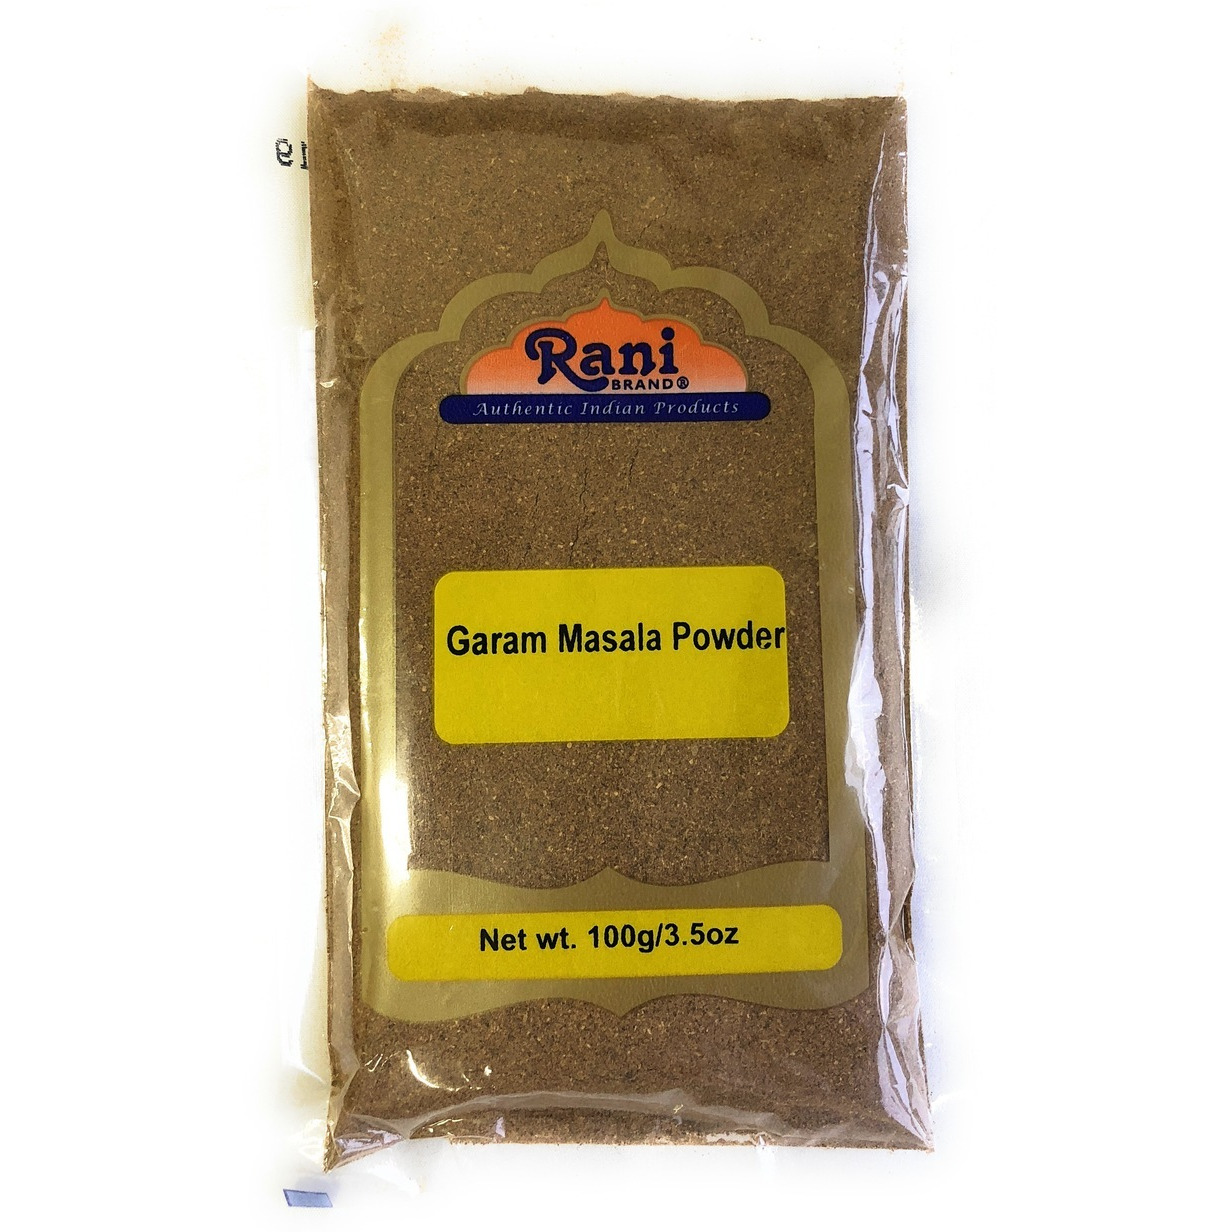 Rani Garam Masala Indian 11 Spice Blend 3.5oz (100g)  All Natural | Gluten Free Ingredients | Salt Free | NON-GMO